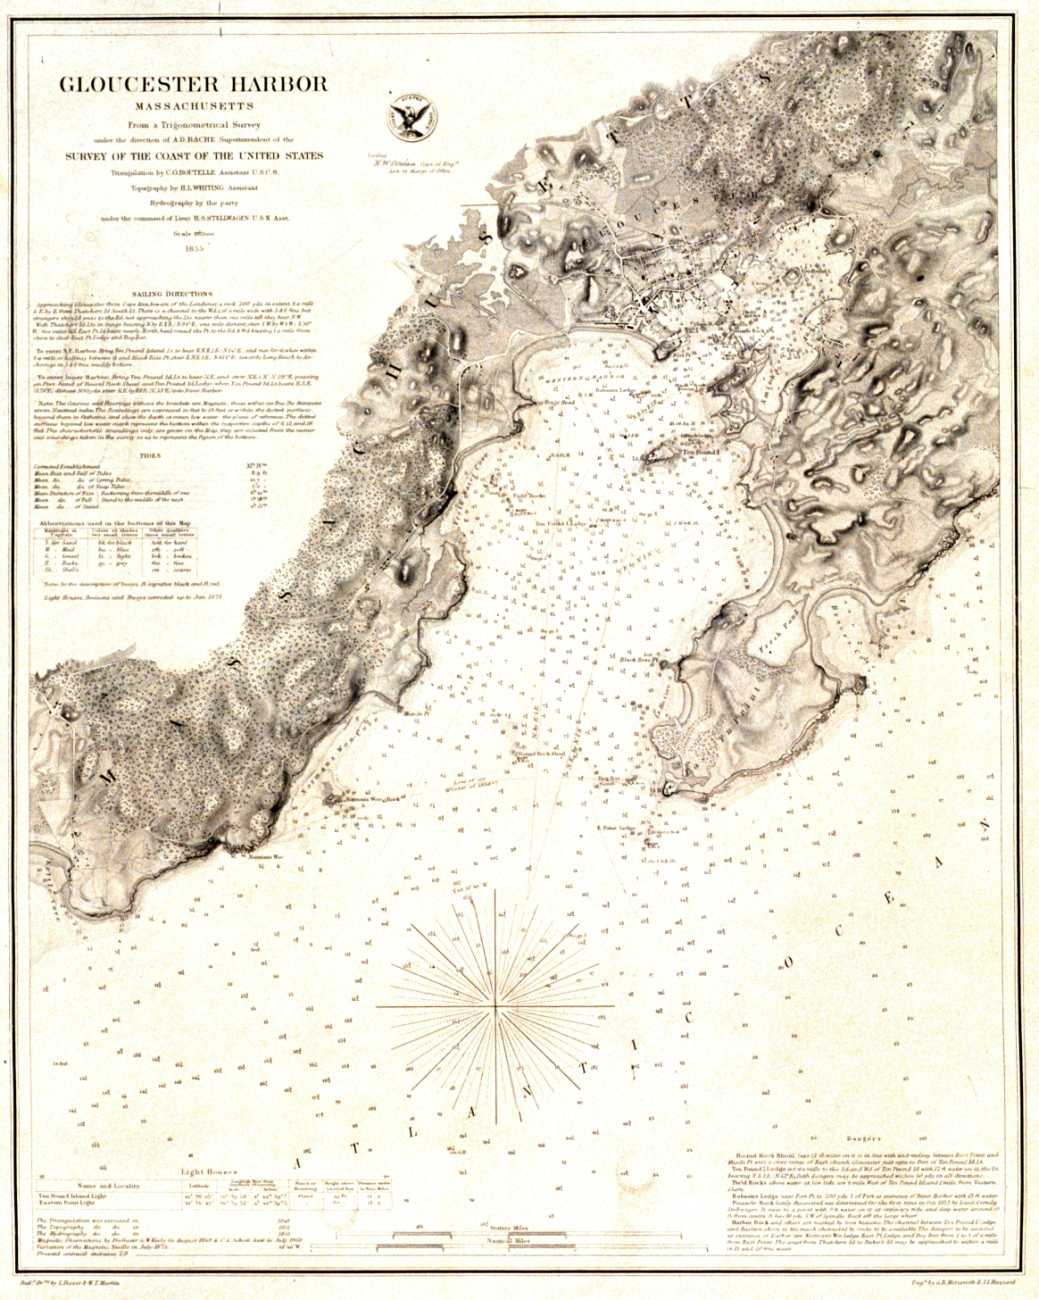 Nautical chart of Gloucester Harbor, Massachusetts, 1855